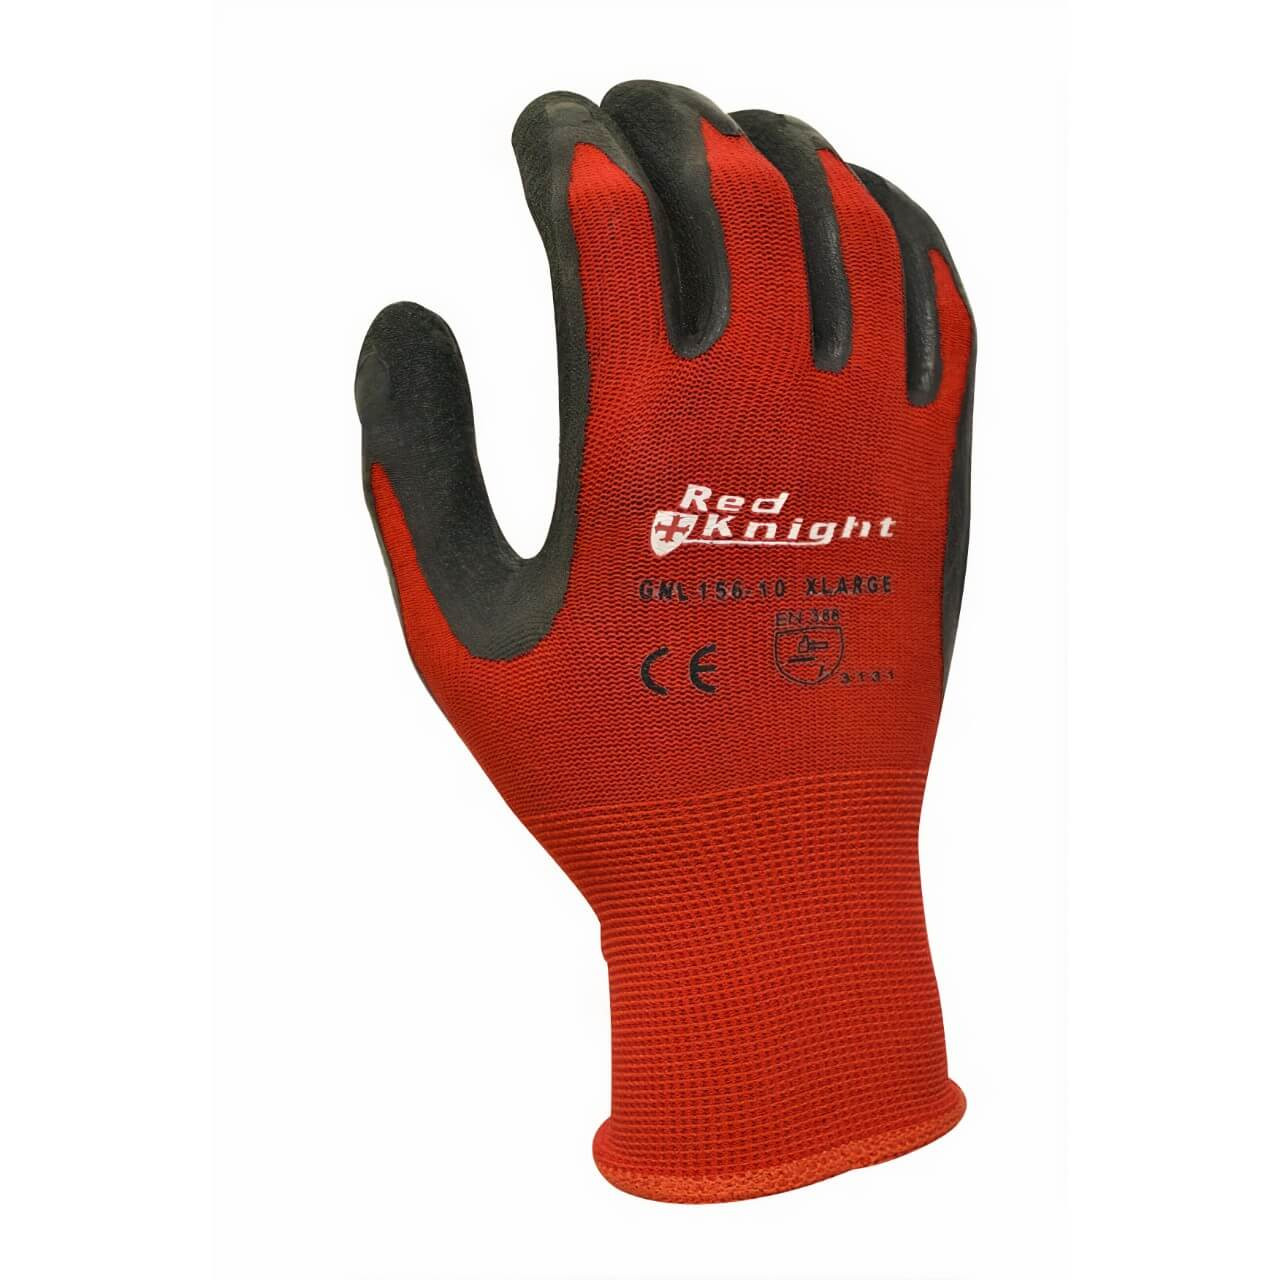 'Red Knight' Latex Glove. Gripmaster L